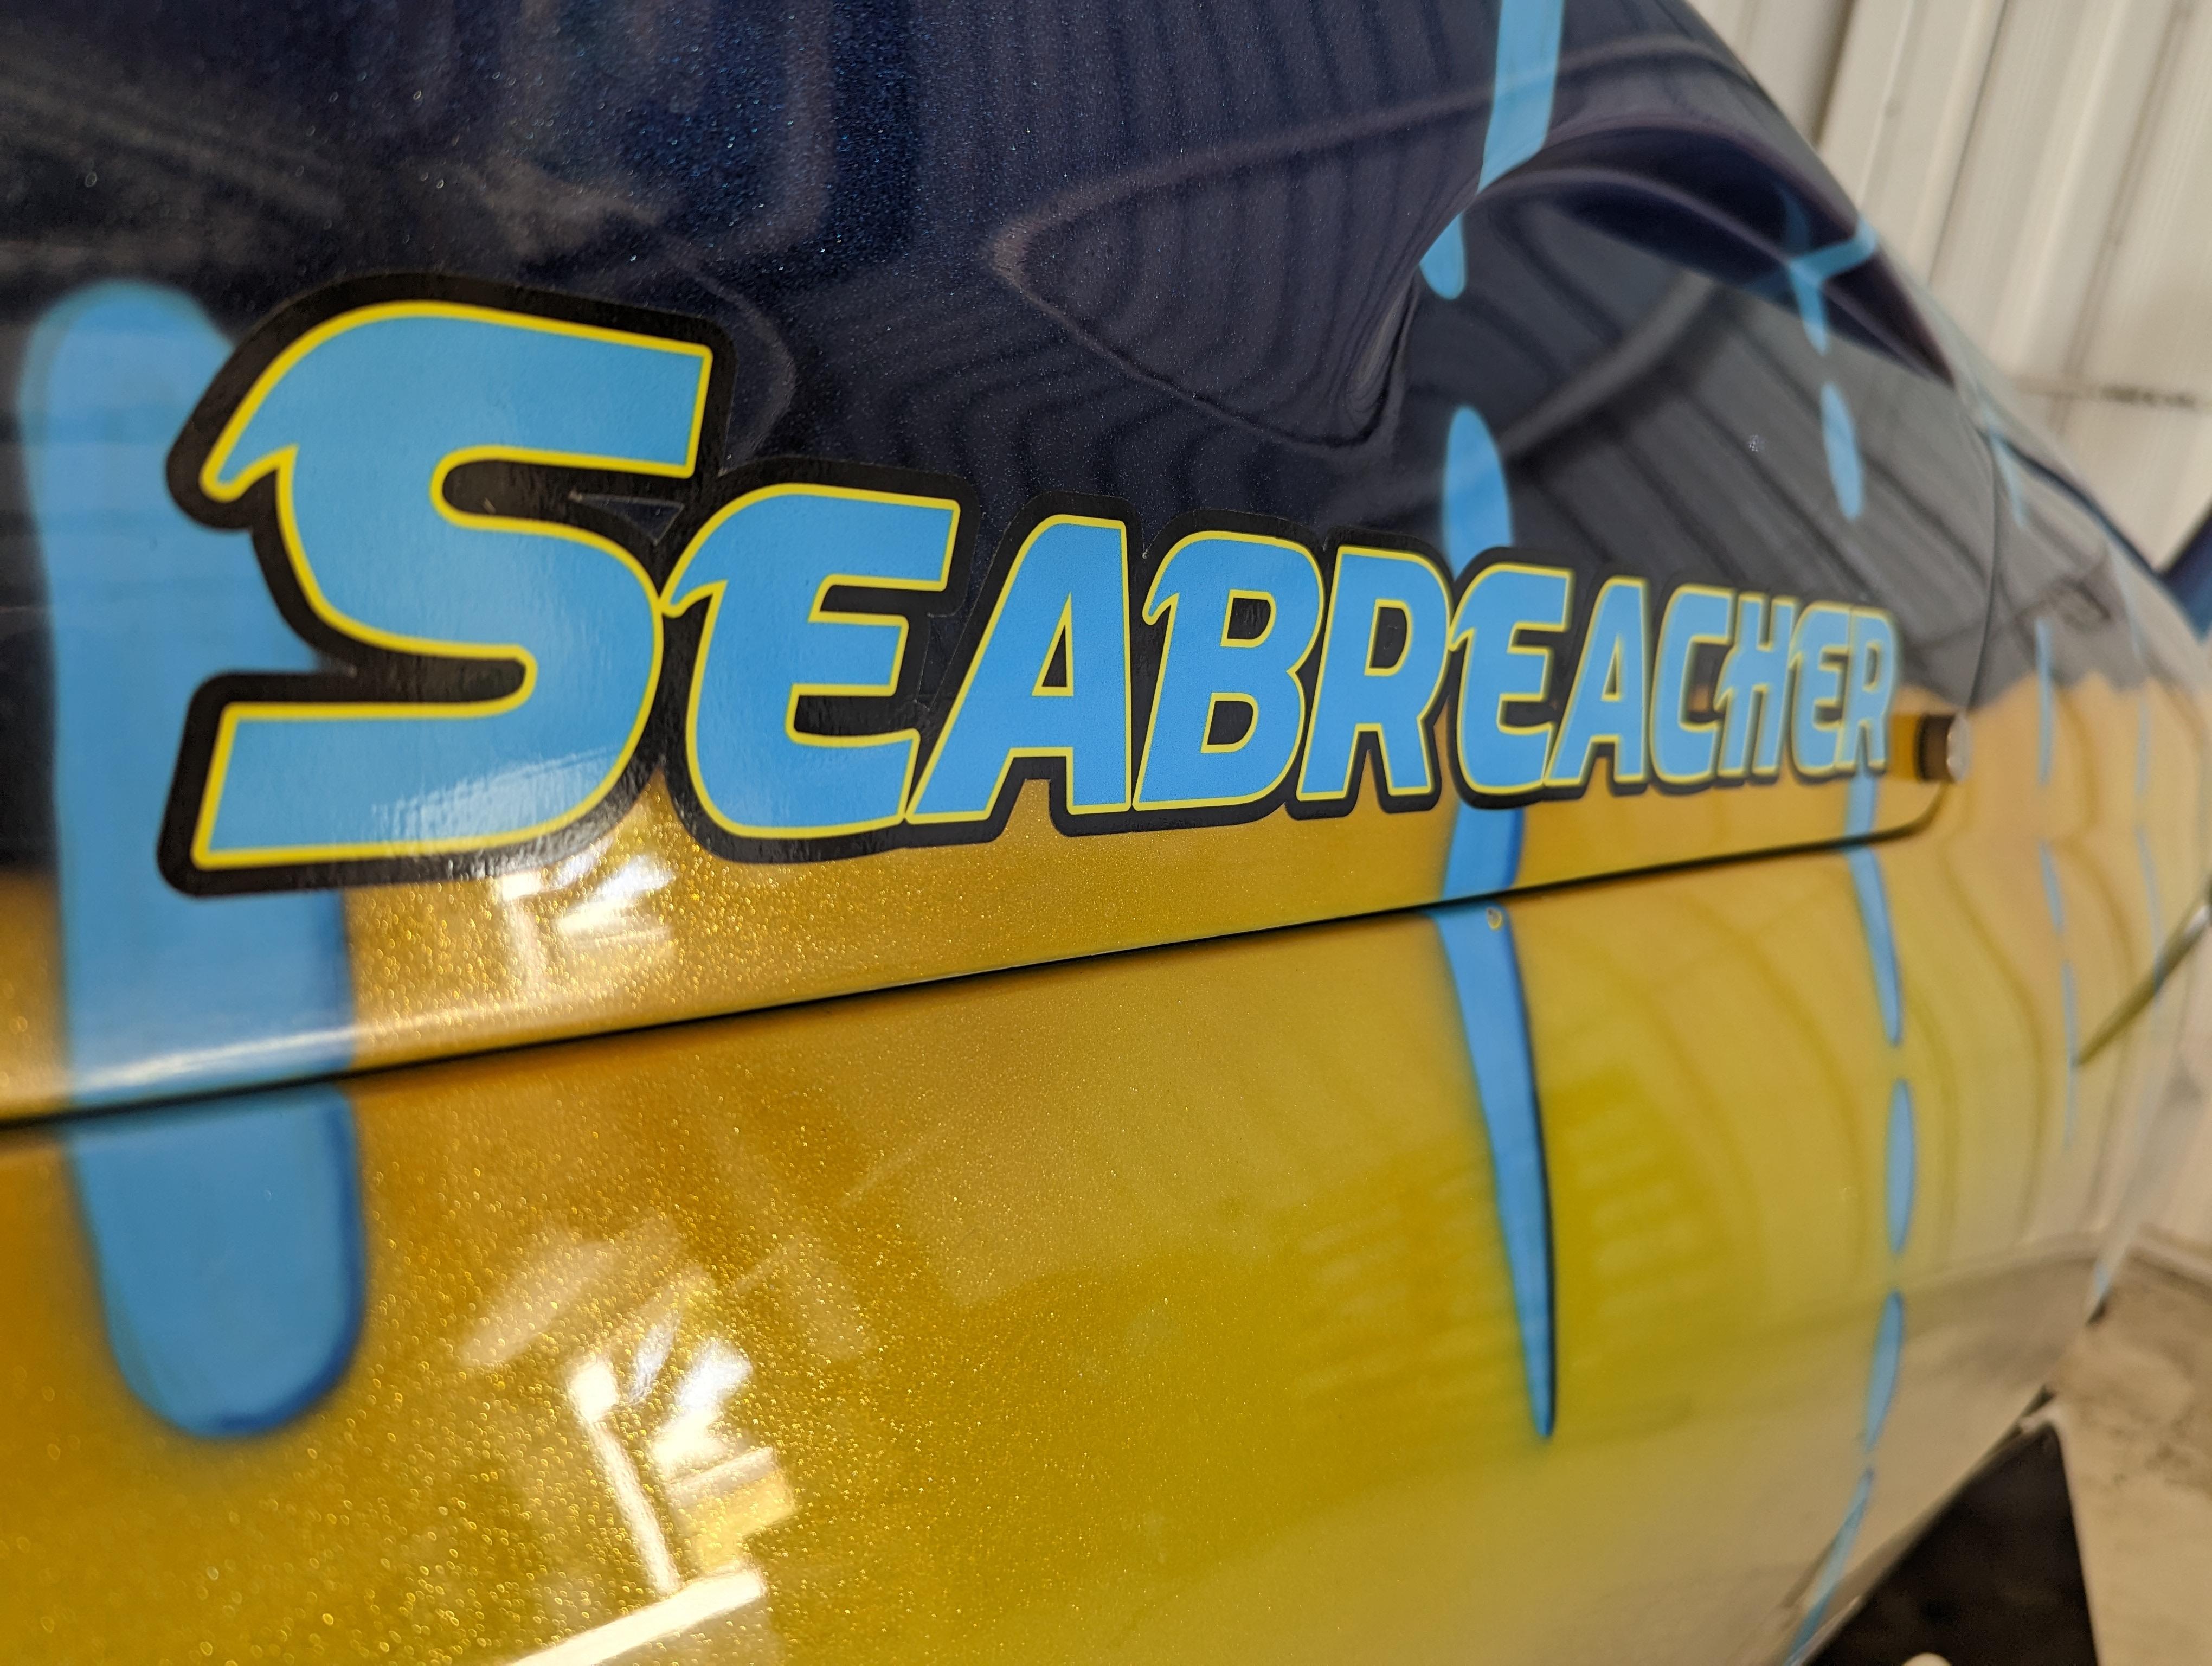 2015 Seabreacher Sailfish